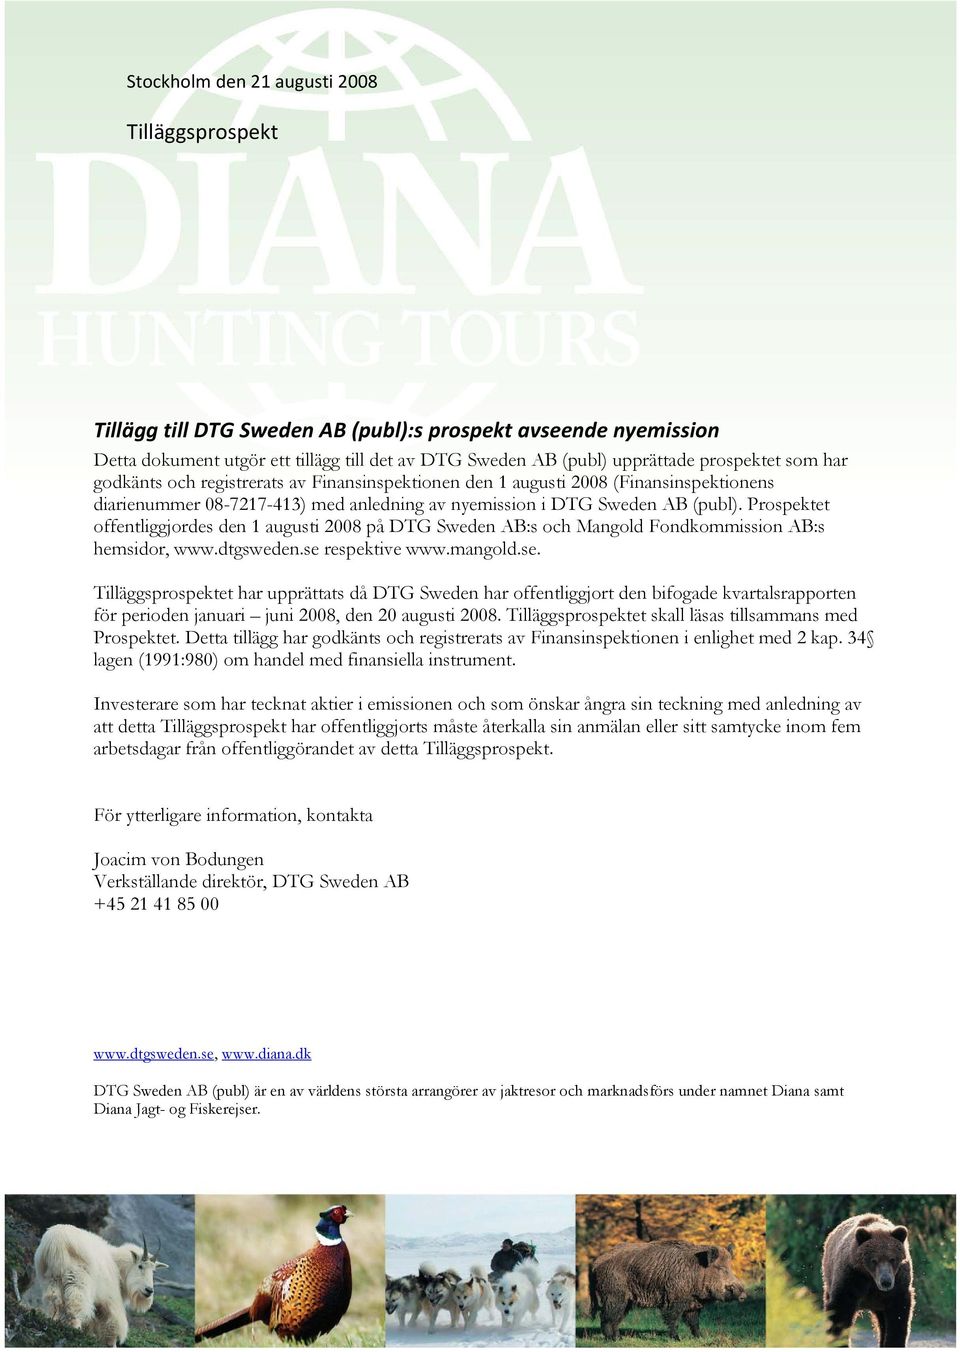 Prospektet offentliggjordes den 1 augusti på DTG Sweden AB:s och Mangold Fondkommission AB:s hemsidor, www.dtgsweden.se 